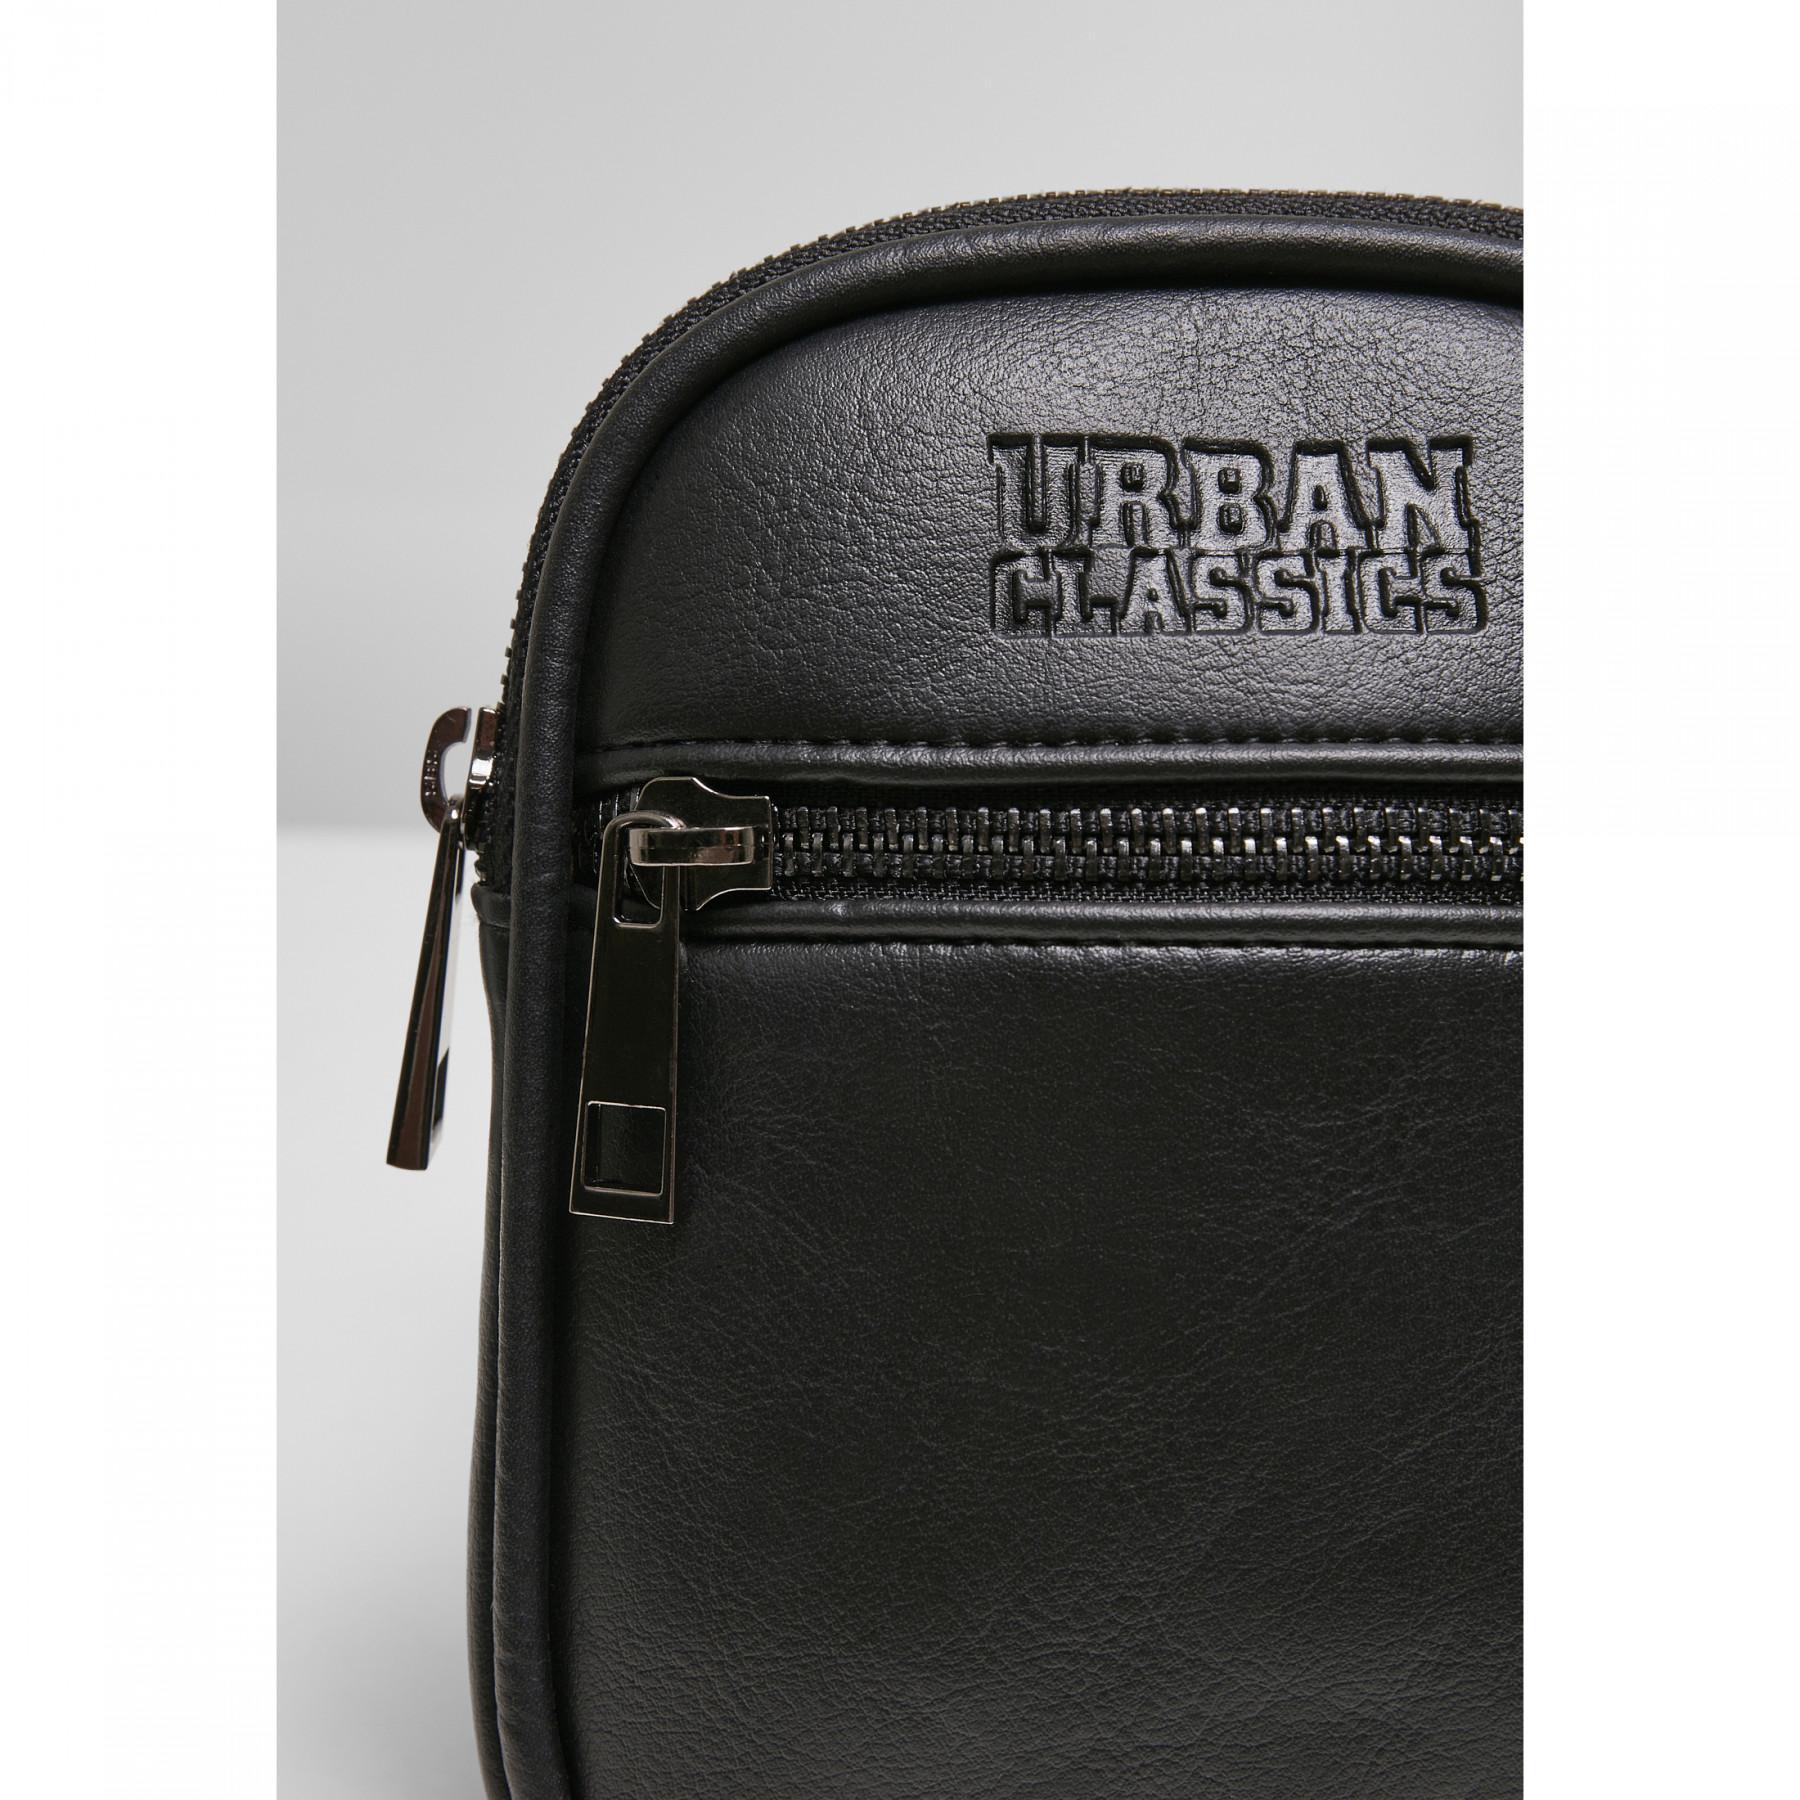 Tasche Urban Classics imitation leather neckpouch